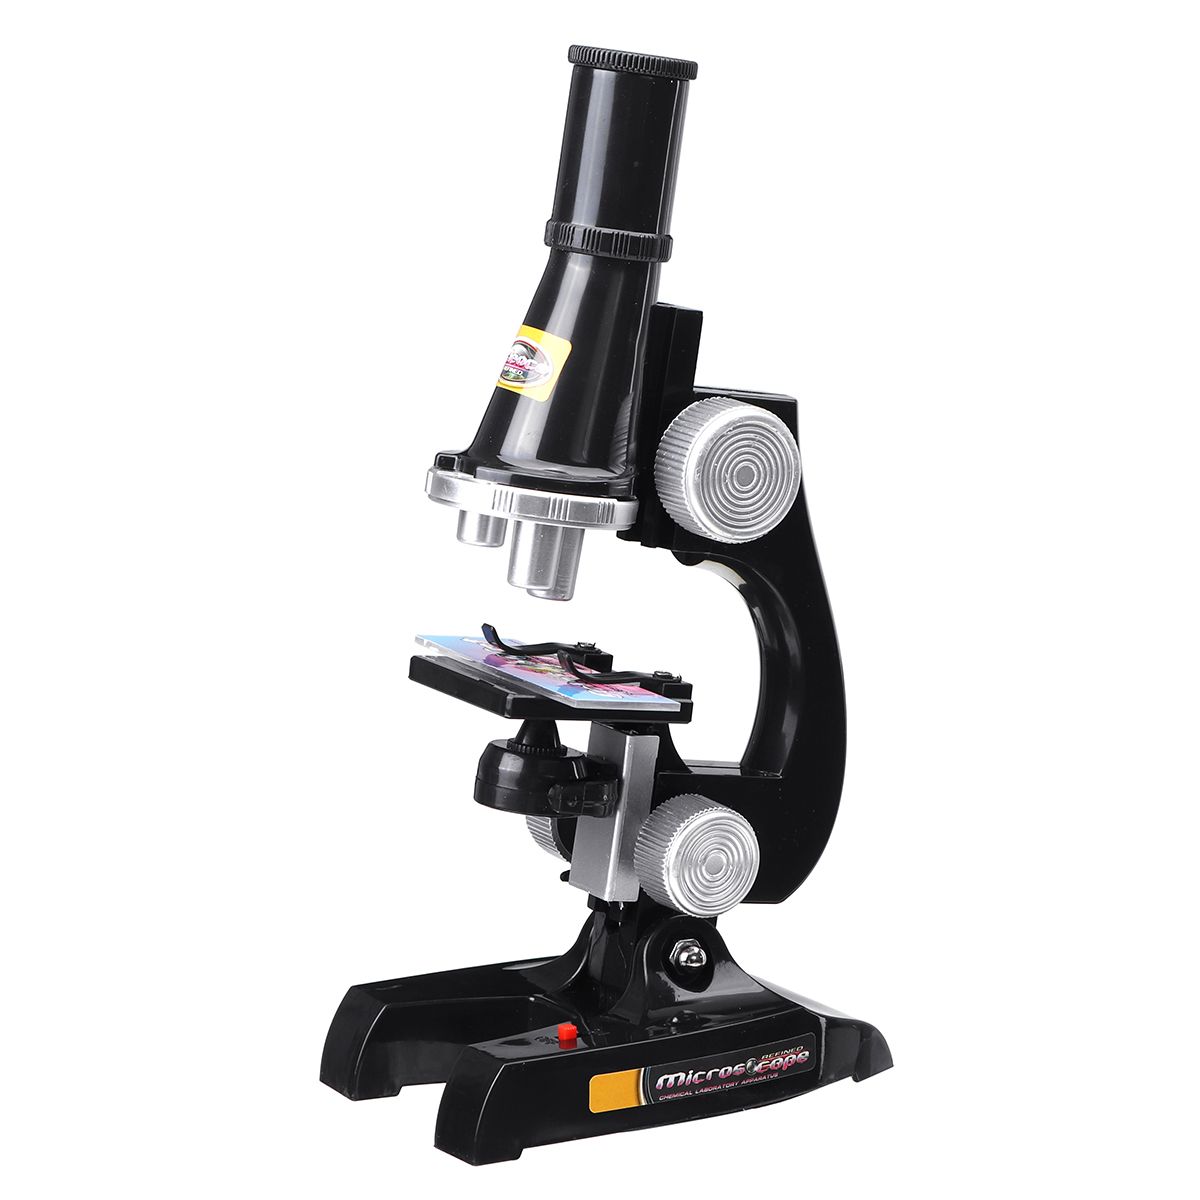 Kids-450X-Microscope-Toys-Student-Science-Kit-Beginner-Educational-Toy-Set-Gift-1686178